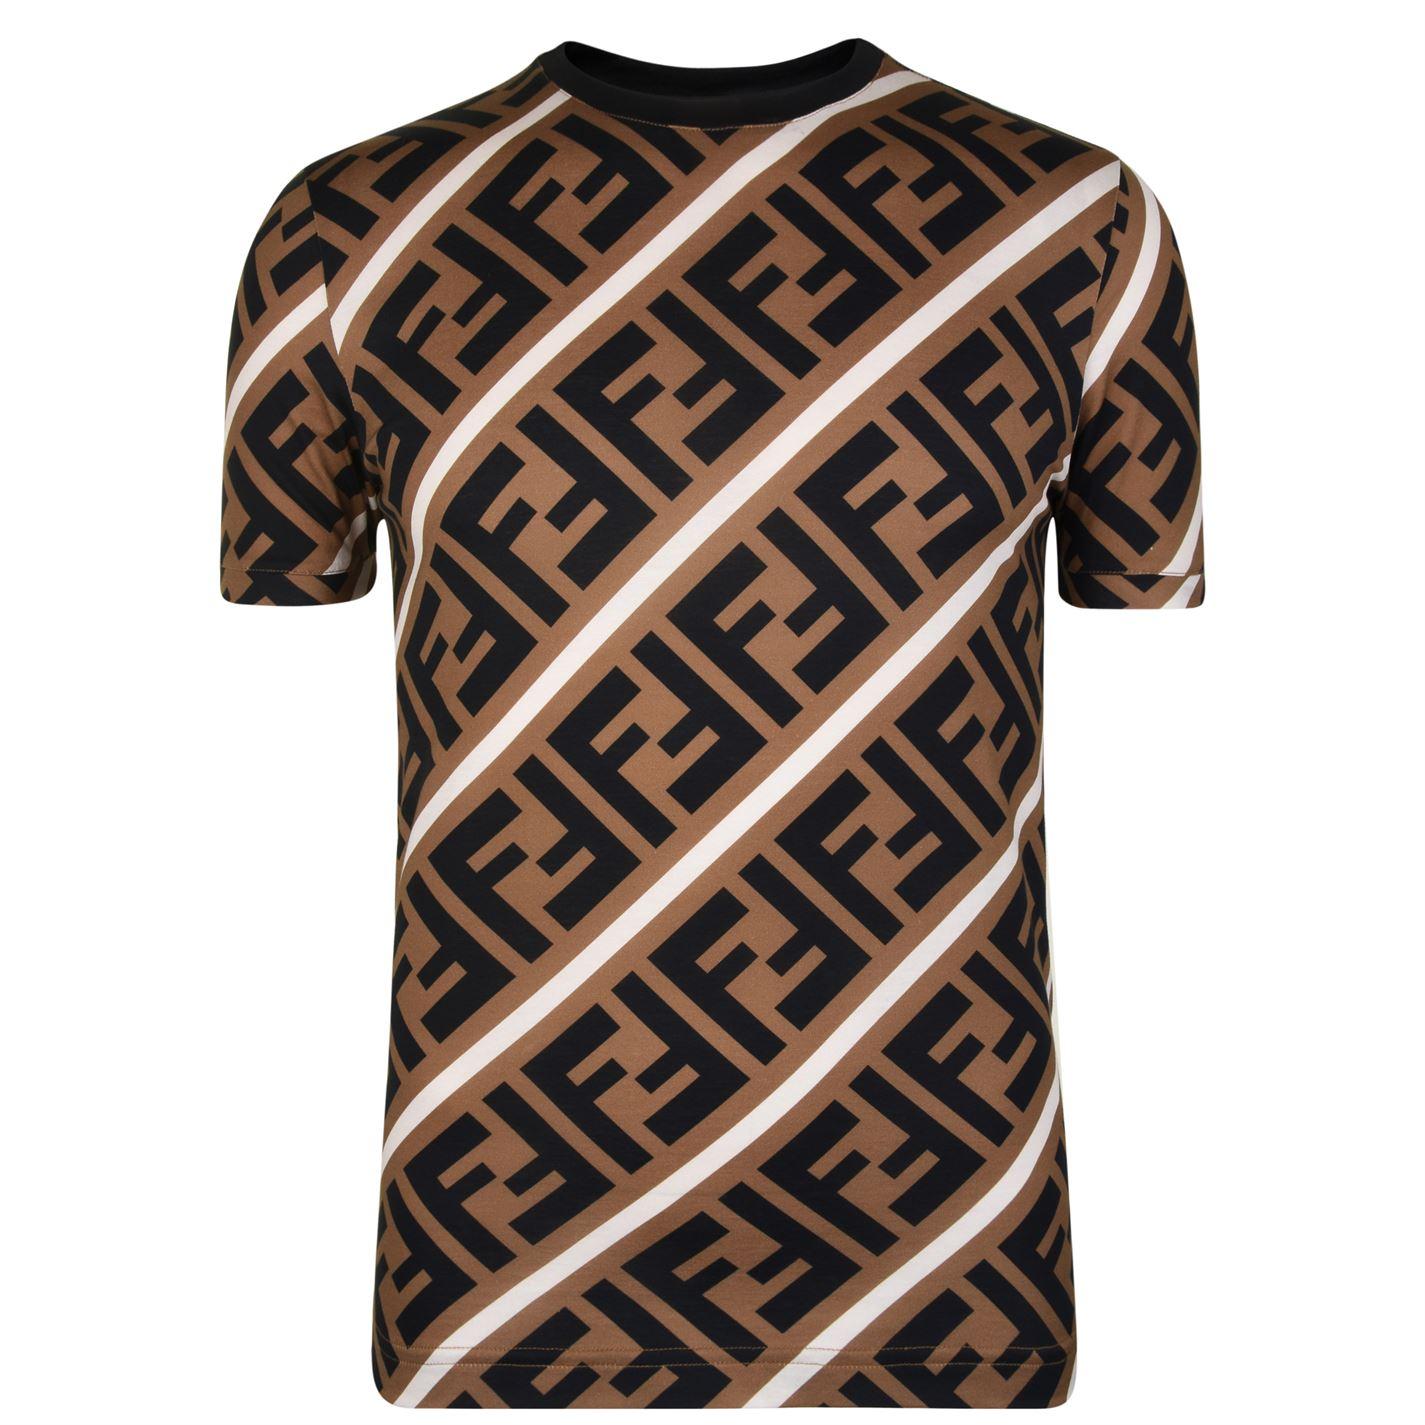 Fendi Ff Short Sleeve T Shirt in Brown for Men - Lyst